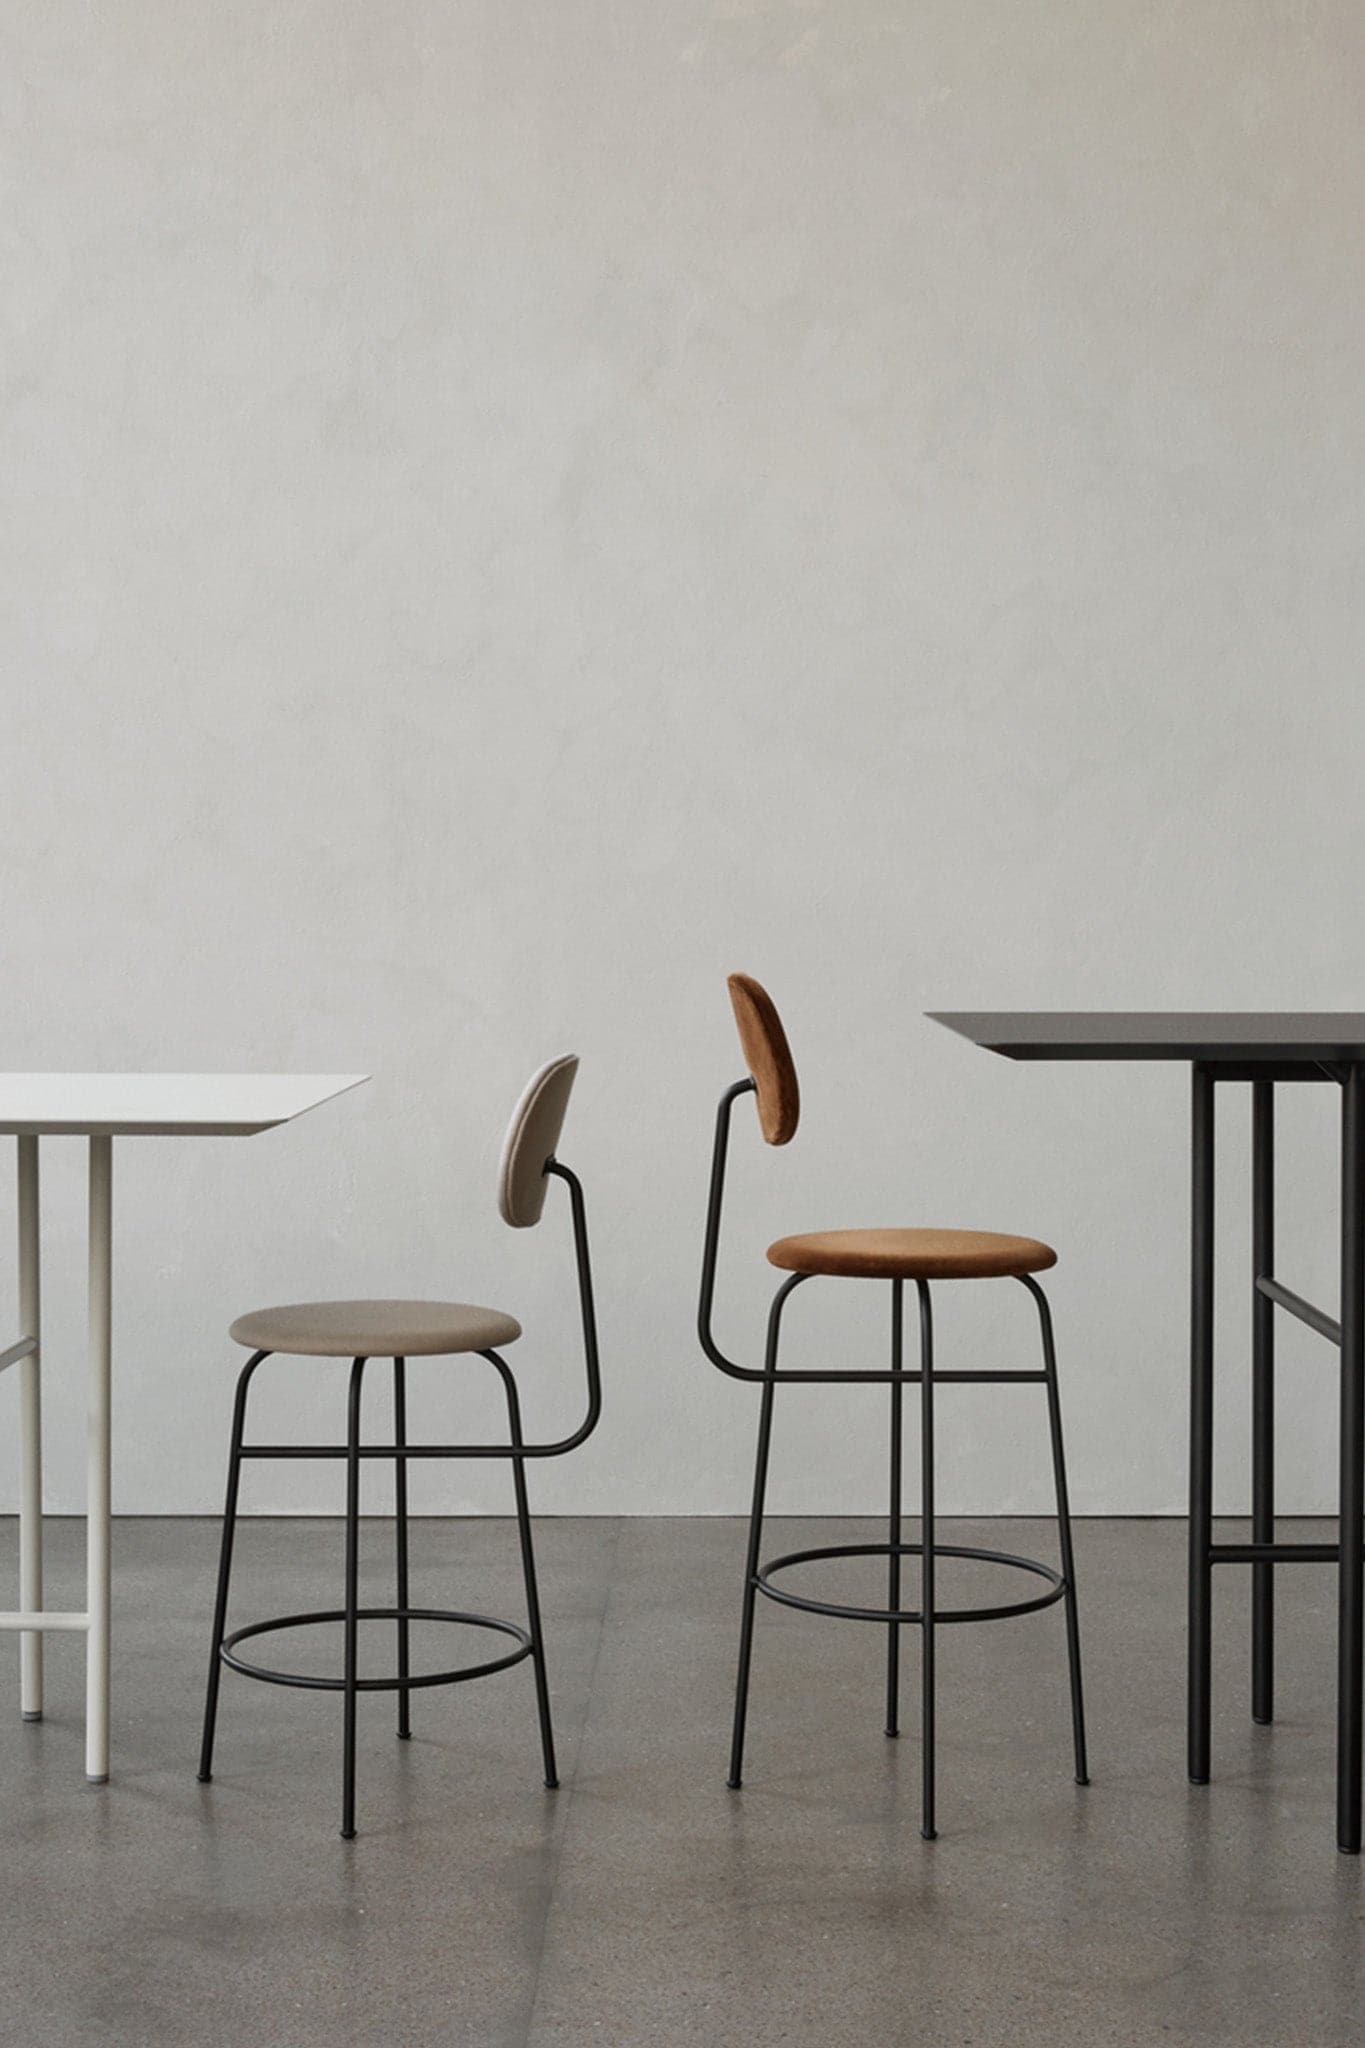 Menu Afteroom Counter Chair - Black Steel - Marz DesignsMenu